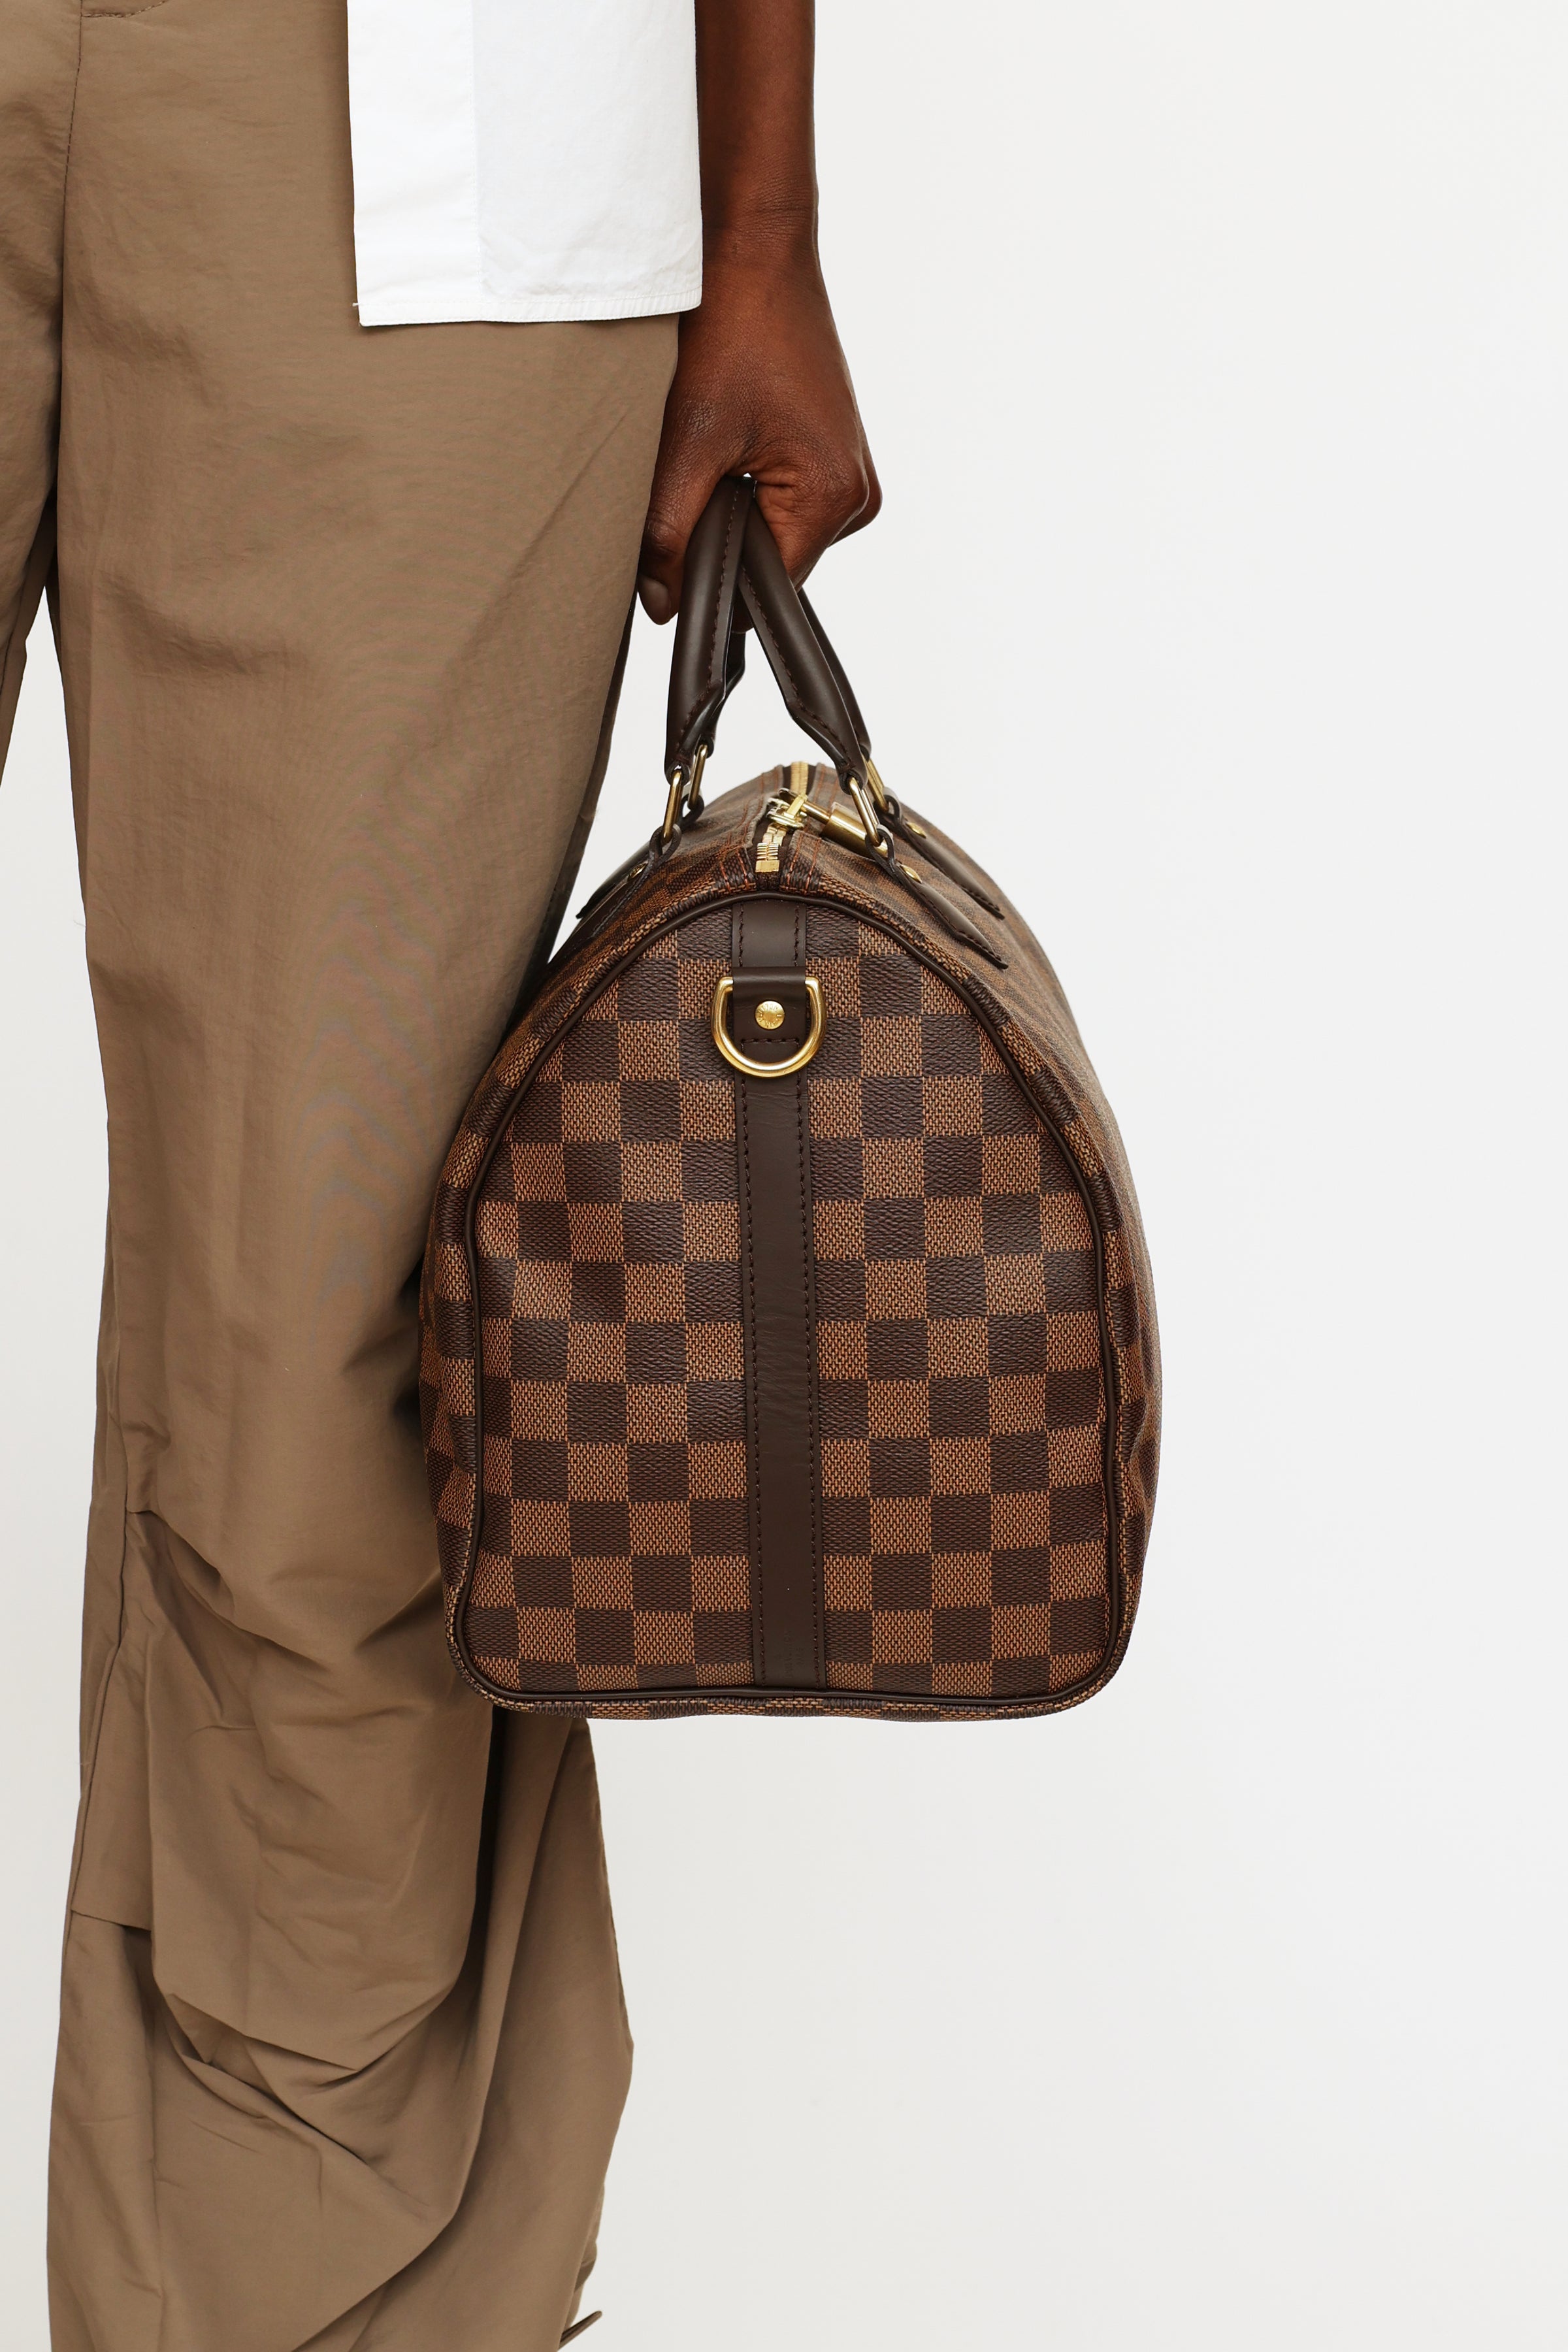 2015 Louis Vuitton Damier Speedy 35 STRAP Bandouliere Bag $1960+TAX